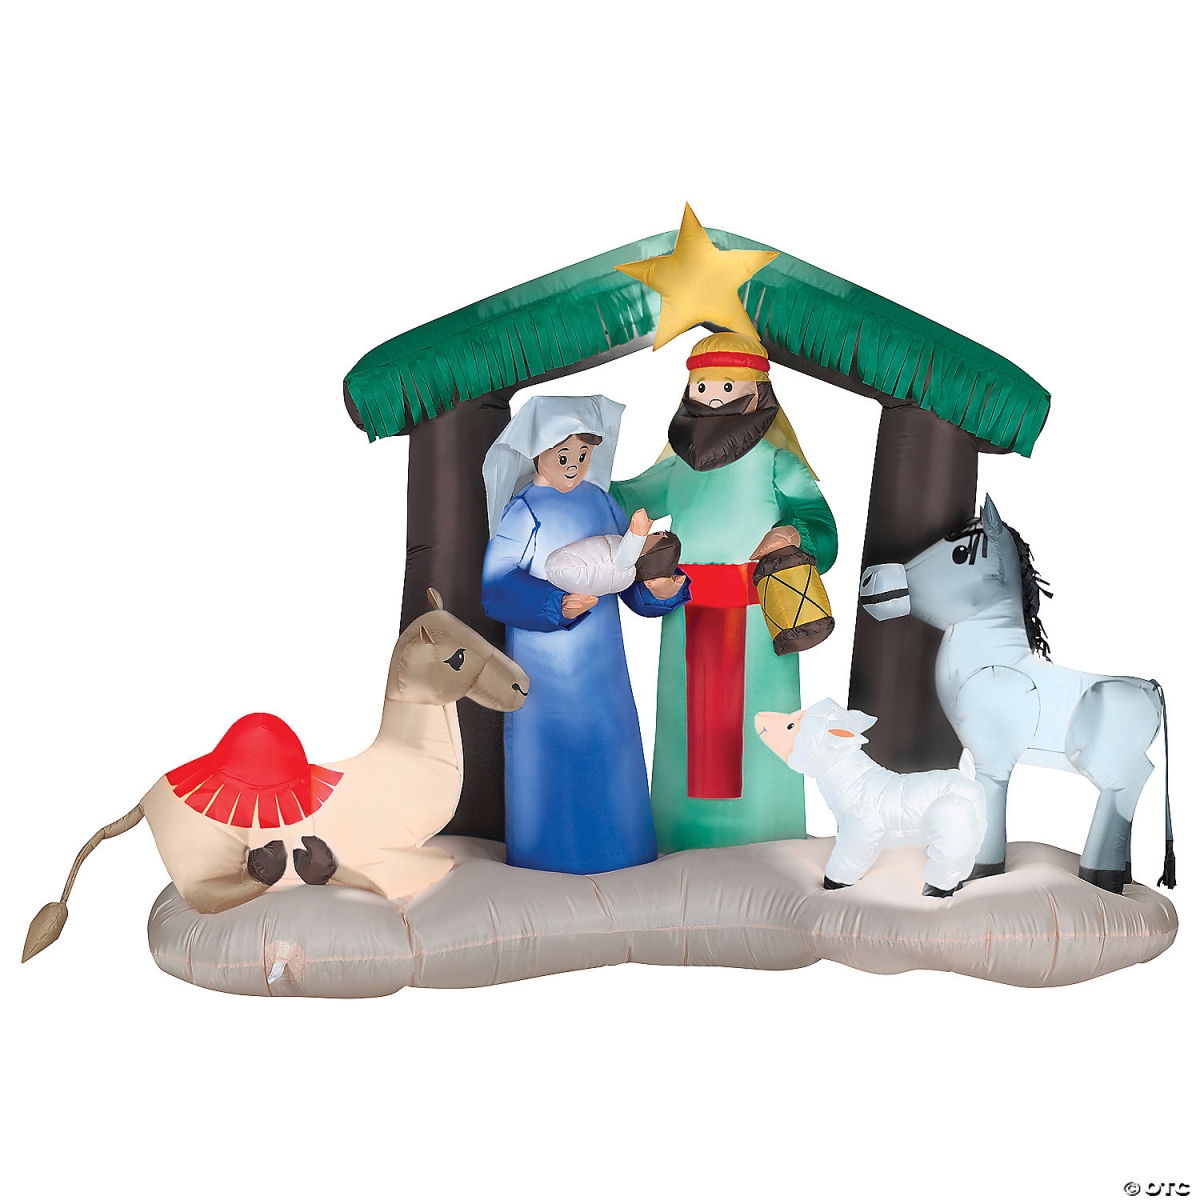 Gemmy SS882521G 78 in. Airblown Nativity Scene Inflatable Christmas Outdoor Yard Decor -  Gemmy Industries